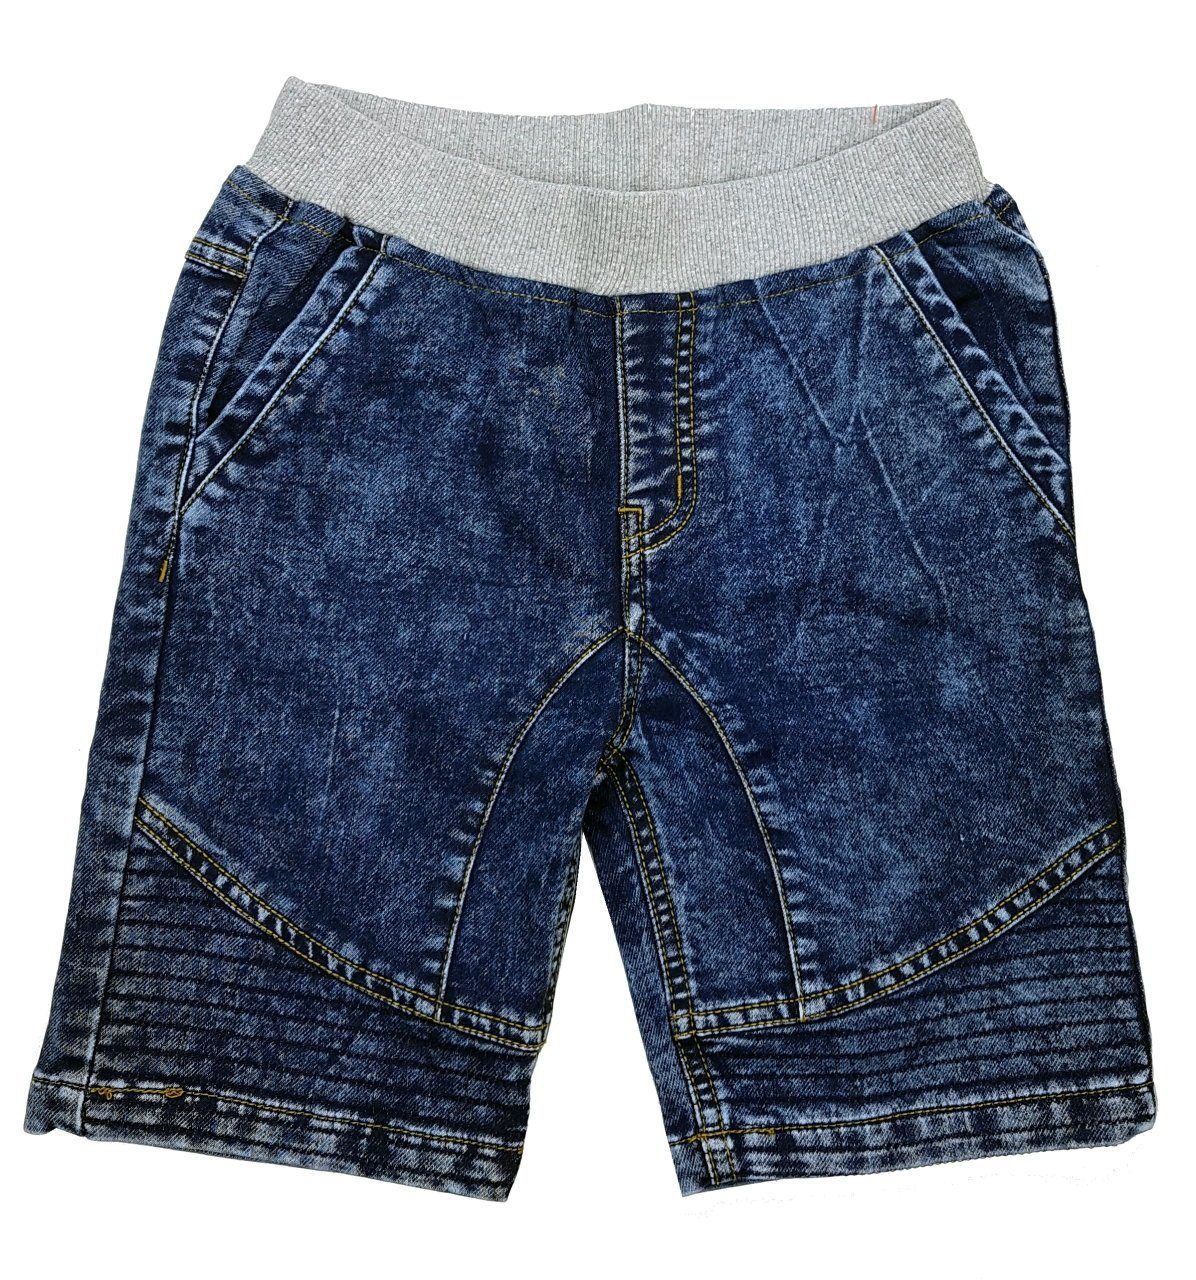 Fashion Stretch Jogg-Jeansbermudas Bermuda Sommerhose, Hose, Jn206 Boy Jeans